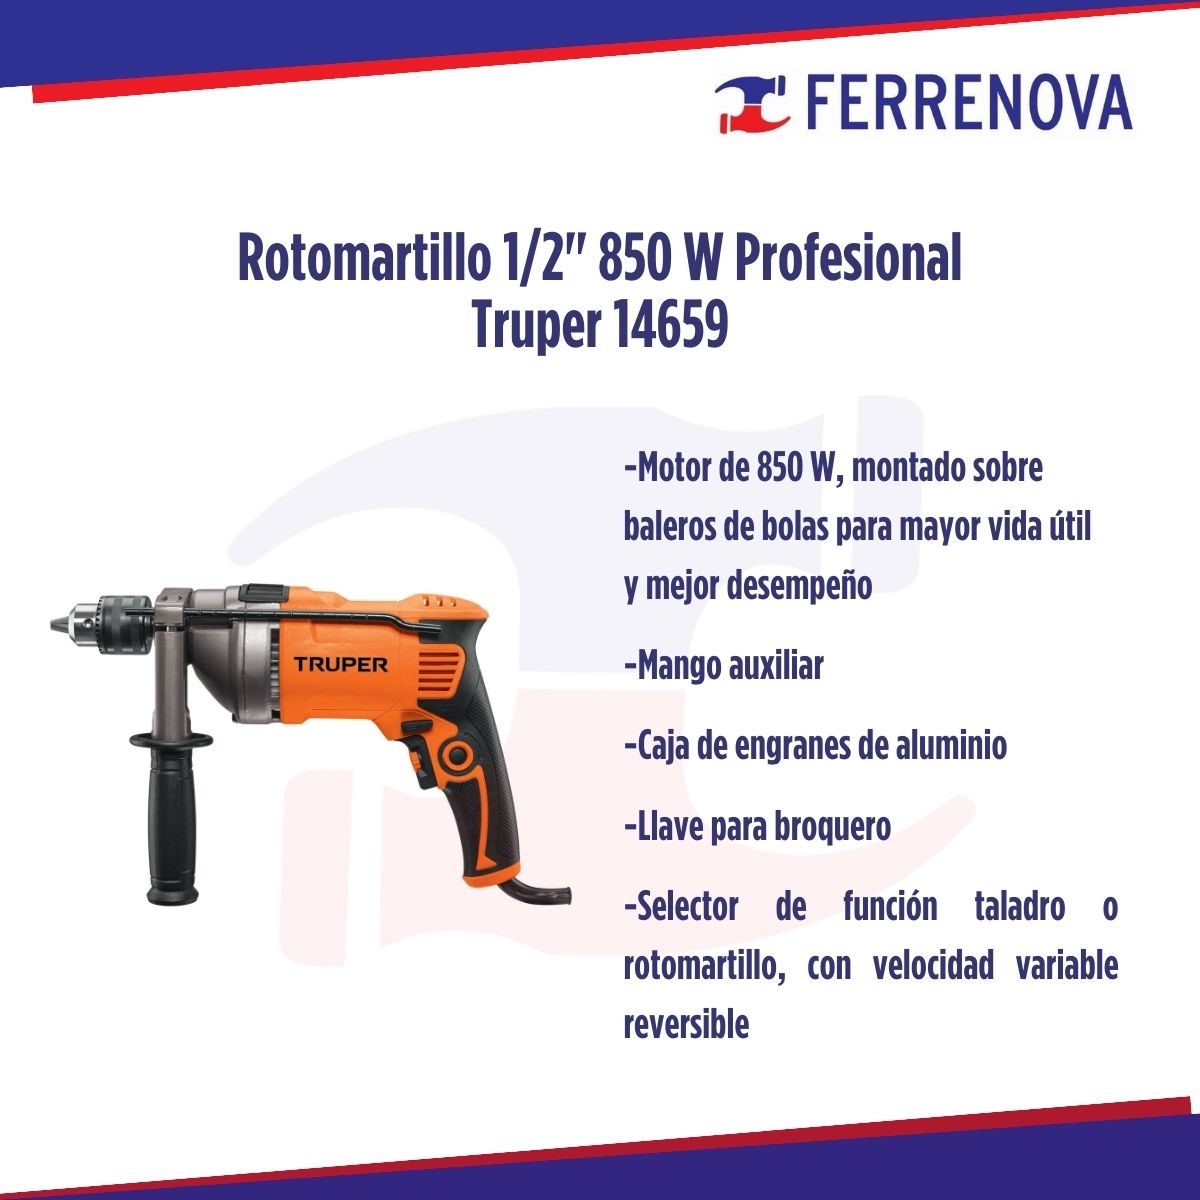 Rotomartillo 1/2" 850 W Profesional Truper 14659